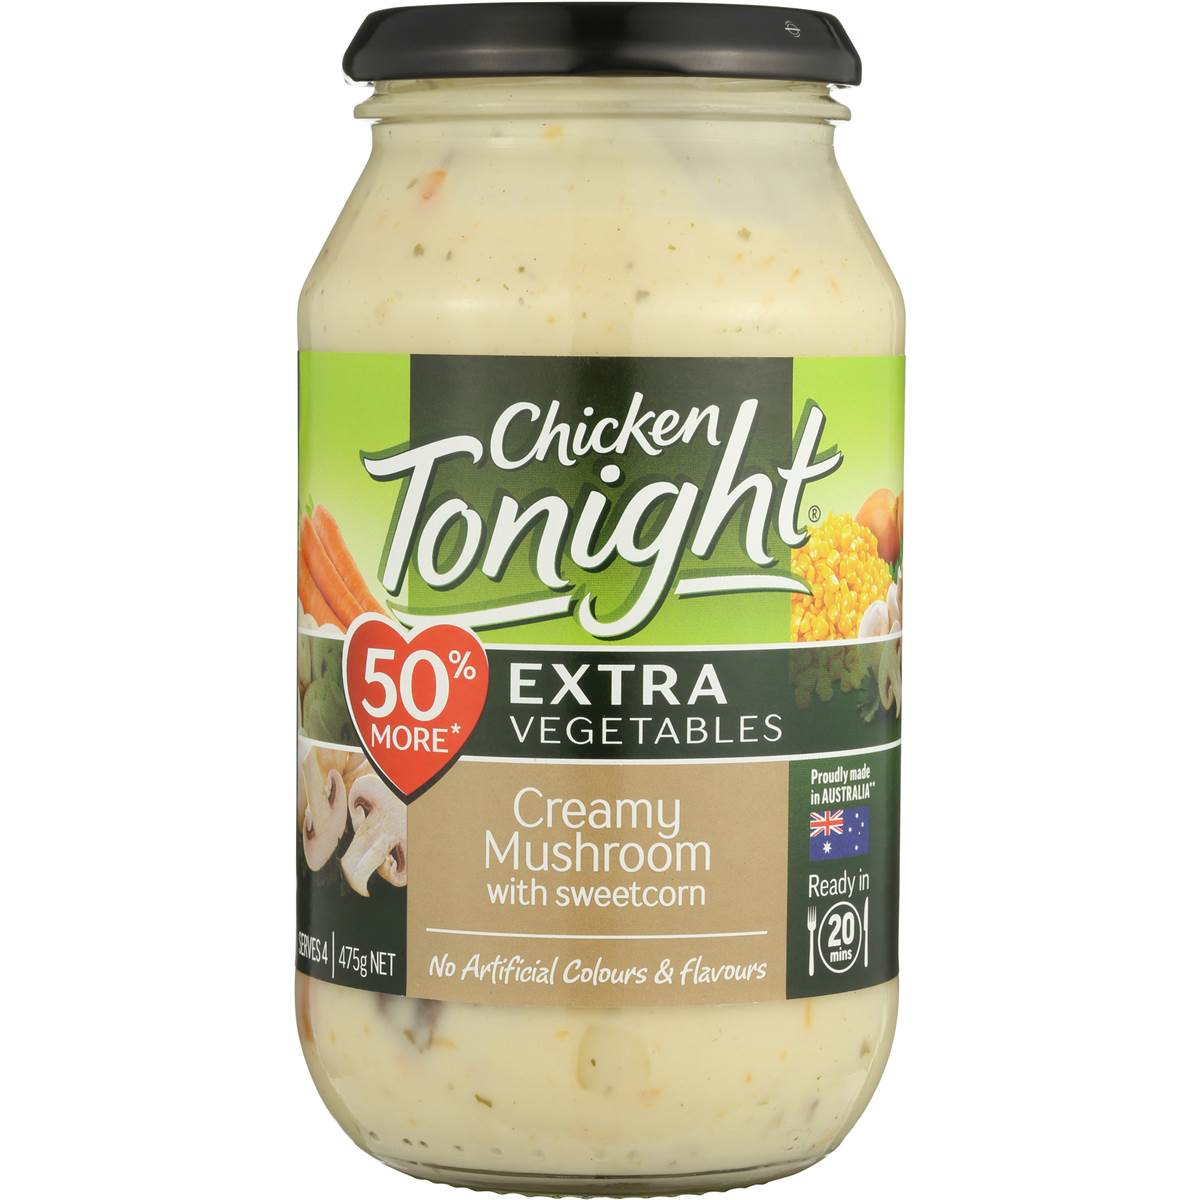 Chicken Tonight Simmer Sauce Extra Creamy Mushroom